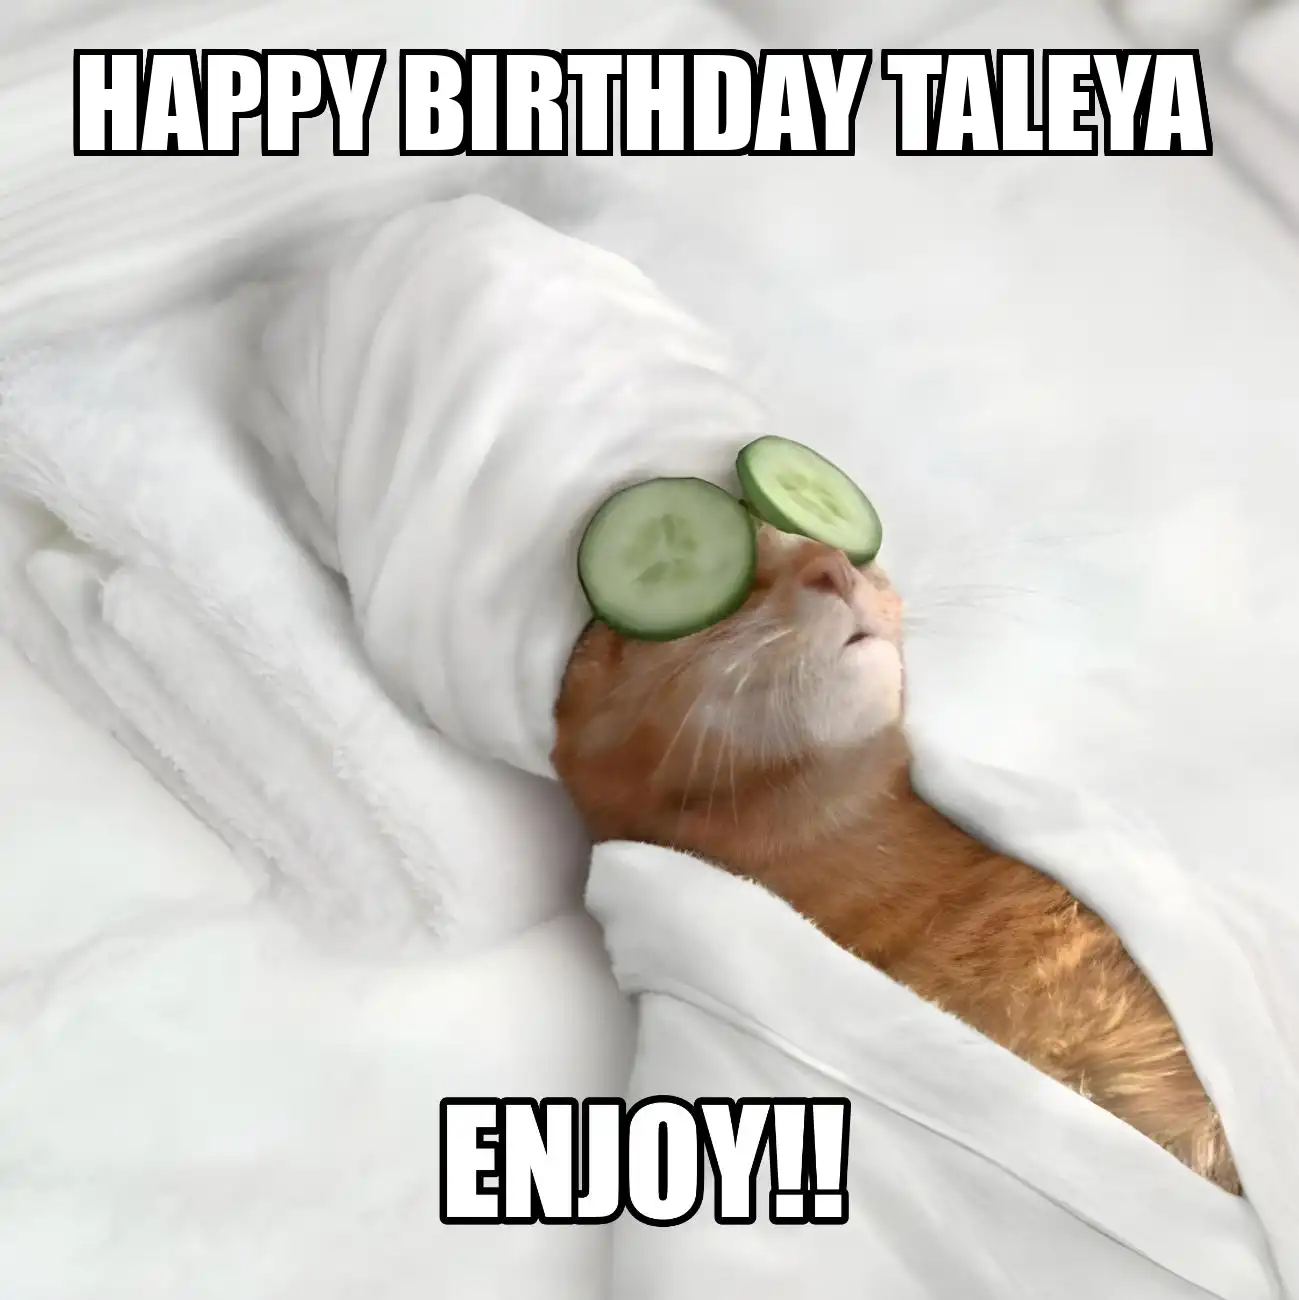 Happy Birthday Taleya Enjoy Cat Meme